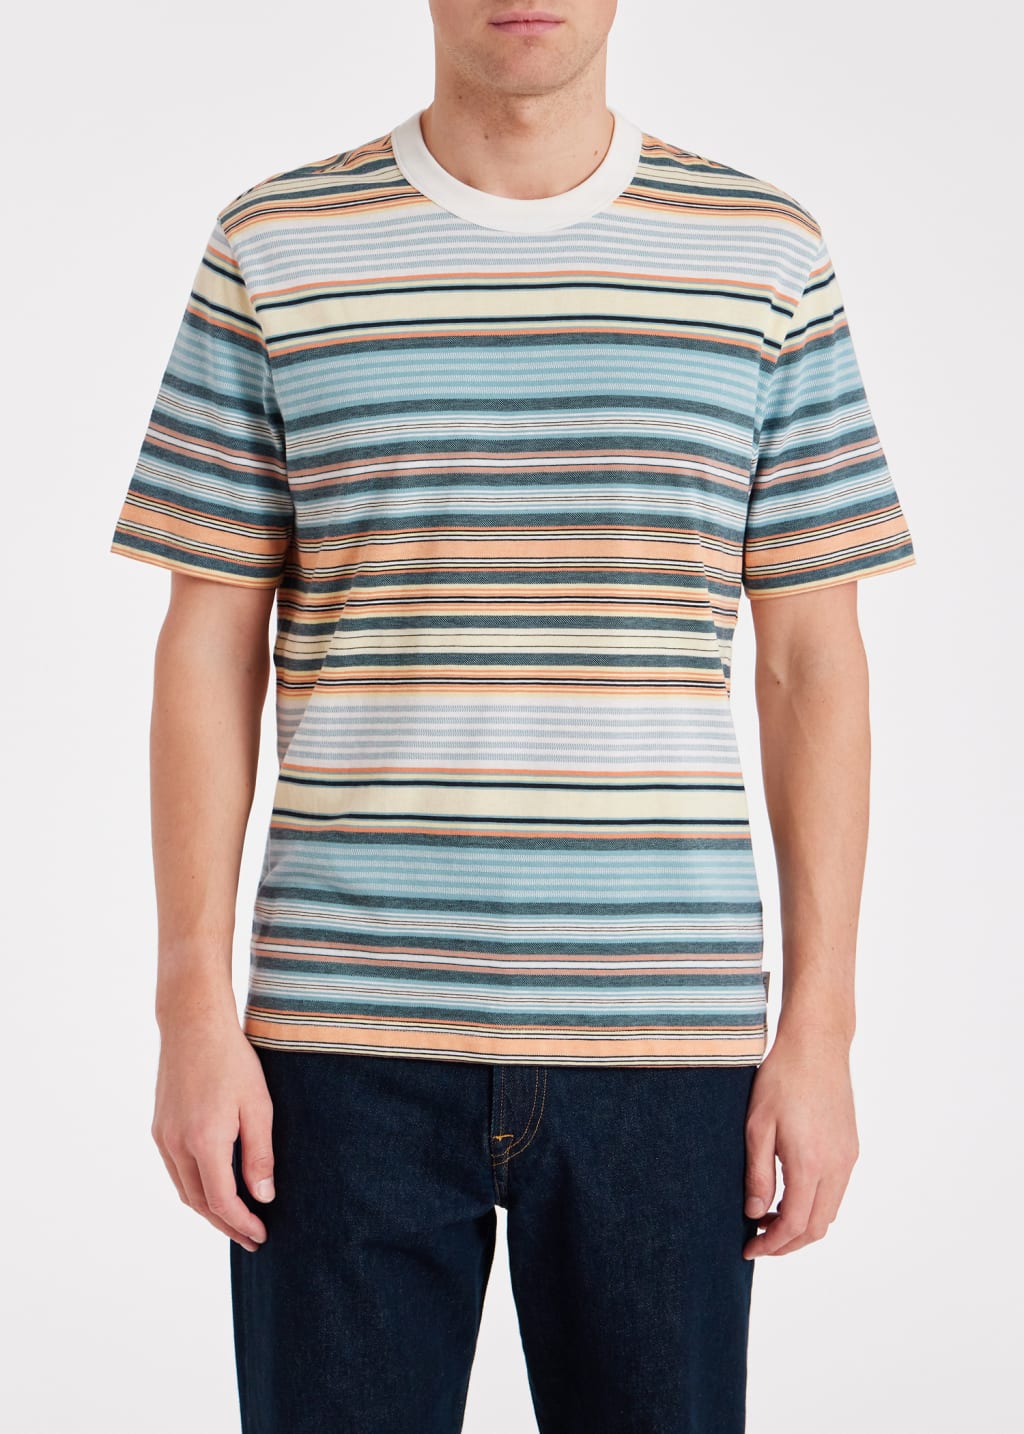 Model View - Blue And Orange Multi-Stripe Cotton T-Shirt Paul Smith